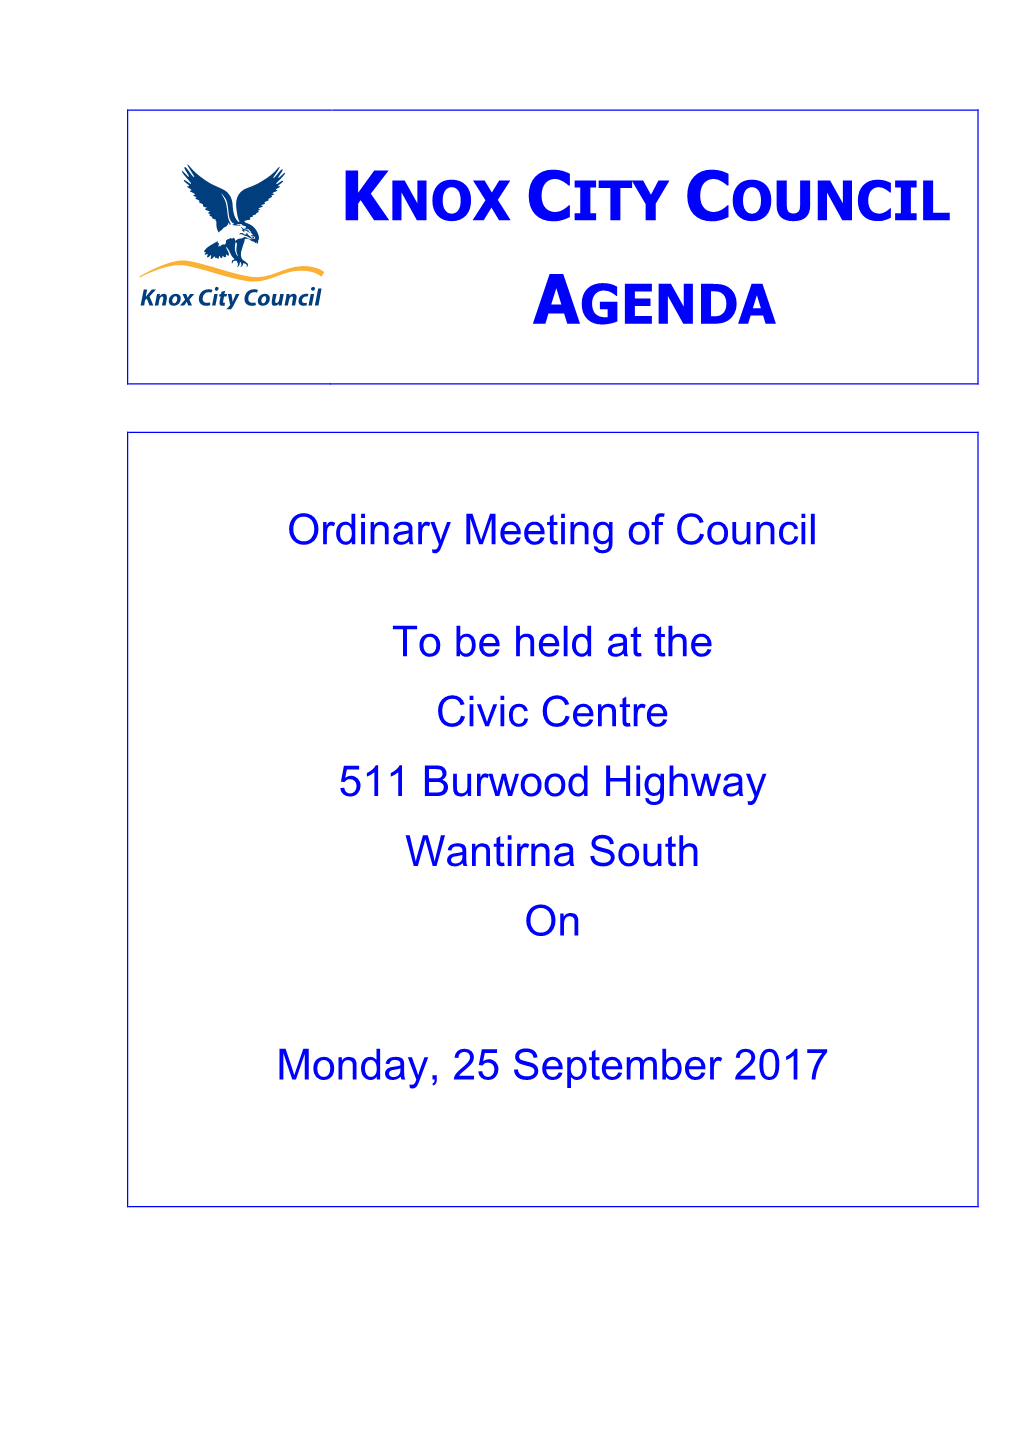 Knox City Council Agenda